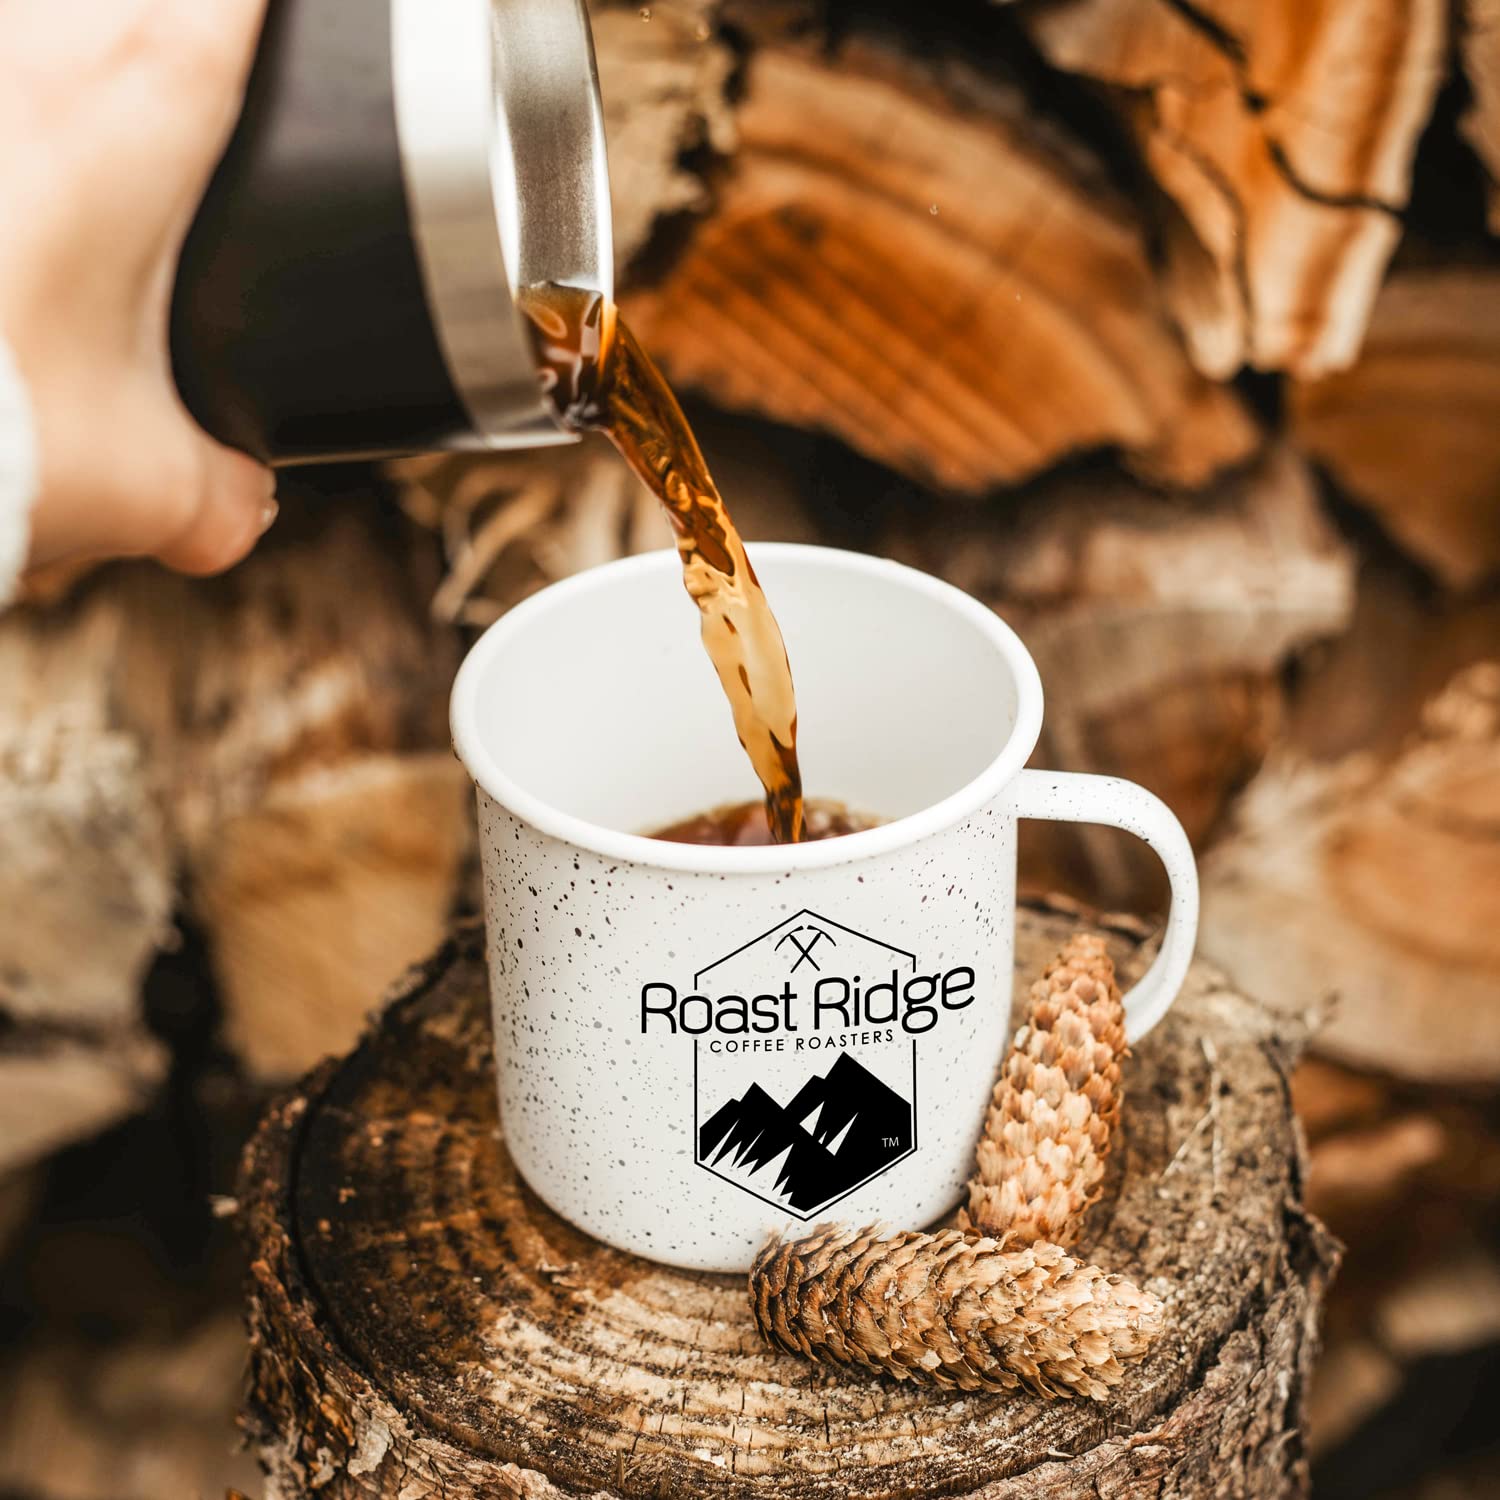 Roast Ridge Single Serve Coffee Pods for Keurig K-Cup Brewers, Variety Pack, Light Roast, Medium Roast, Dark Roast, 100 Count (25 each: Breakfast Blend, Donut Shop, French Roast, Colombian)